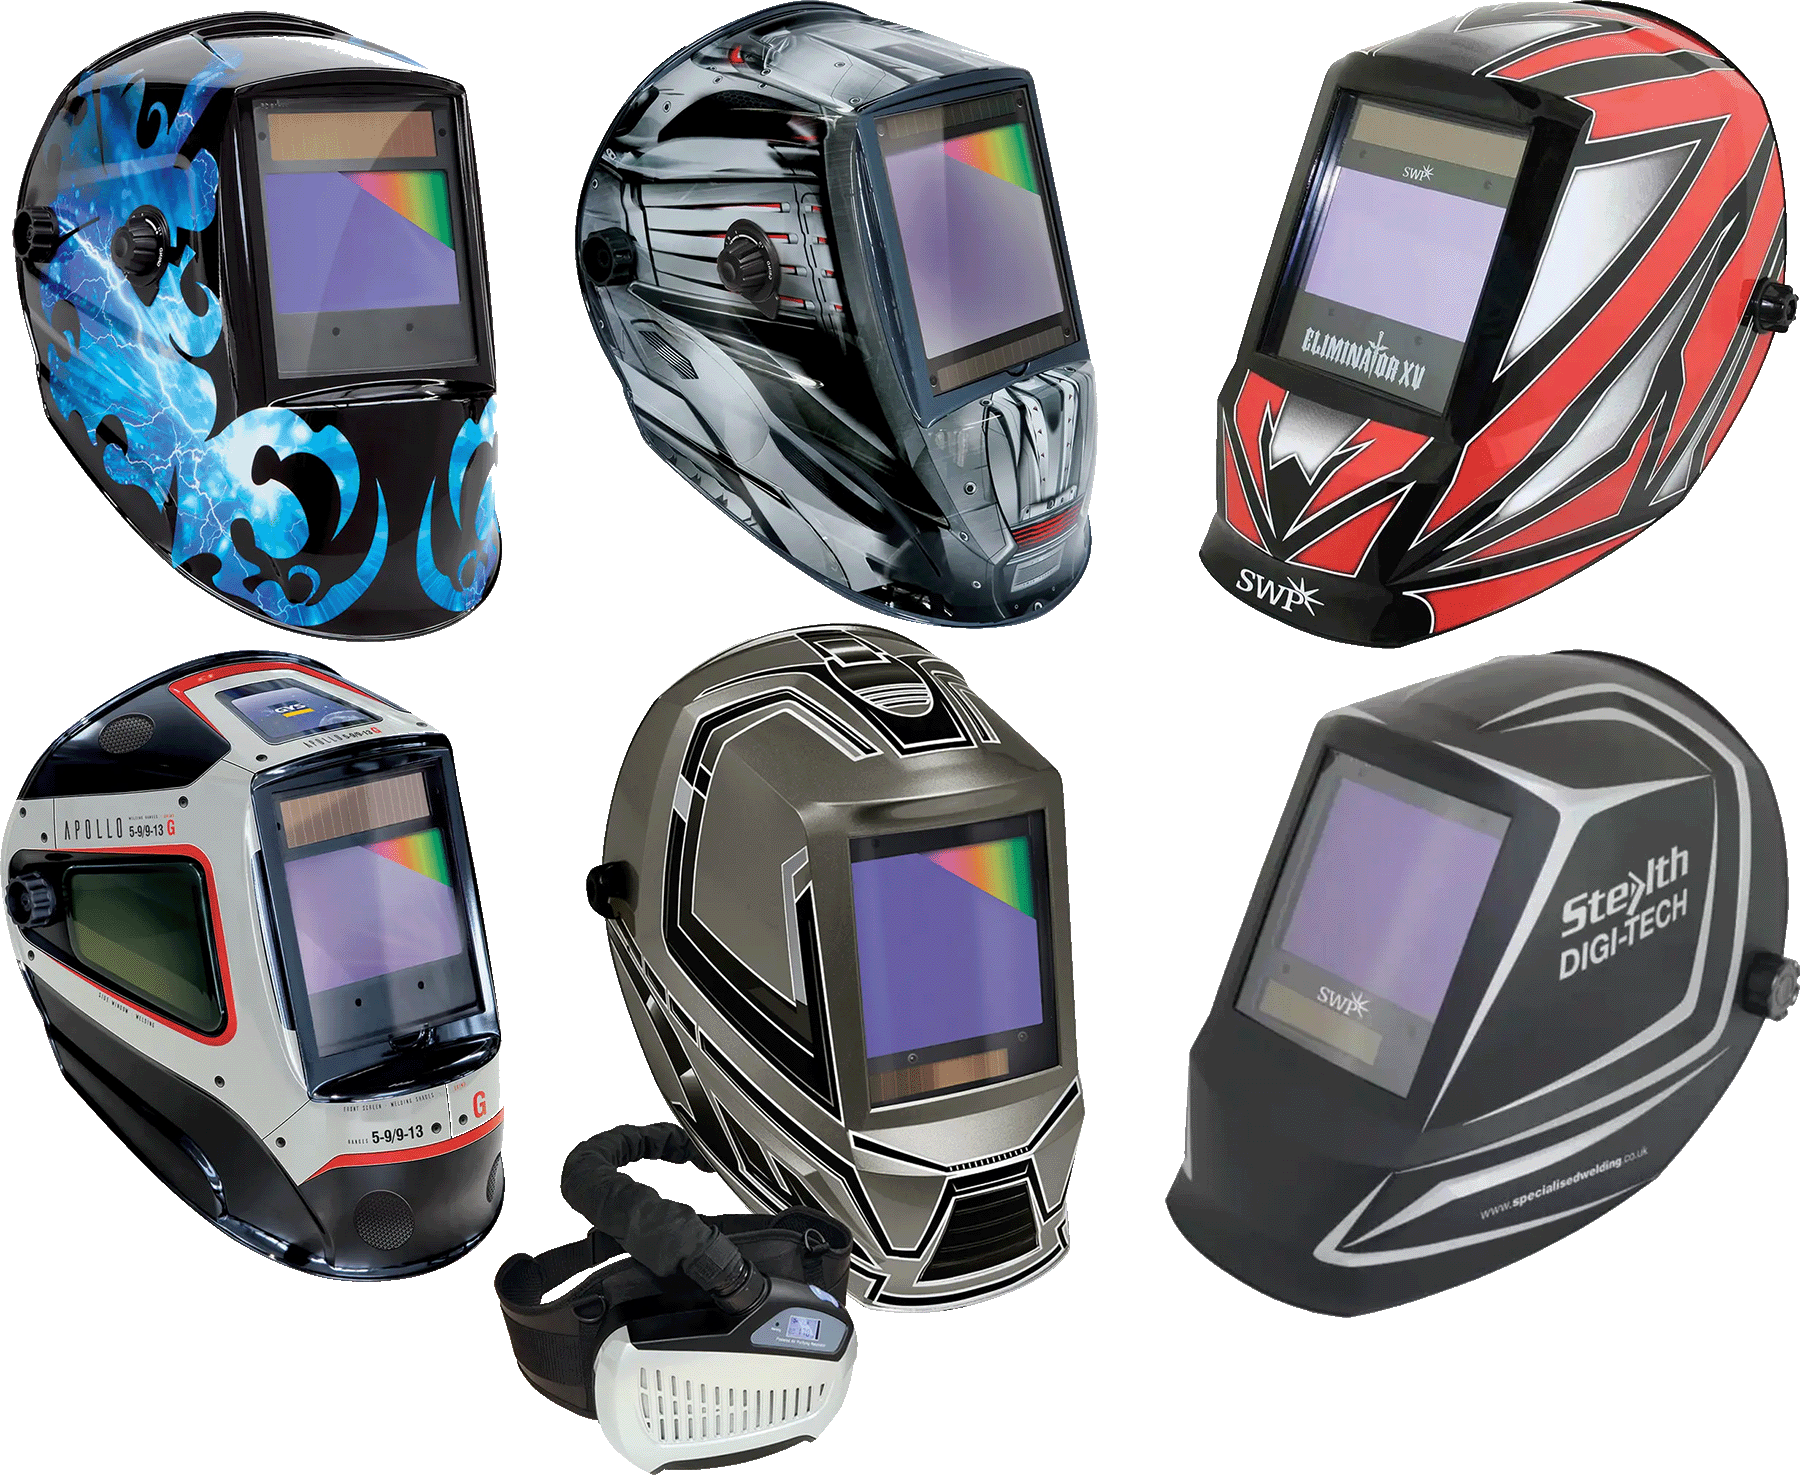 GYS Venus, GYS Alien, SWP Eliminator, GYS Apollo, GYS Gysmatic XXL air feed & SWP Stealth air feed welding helmets